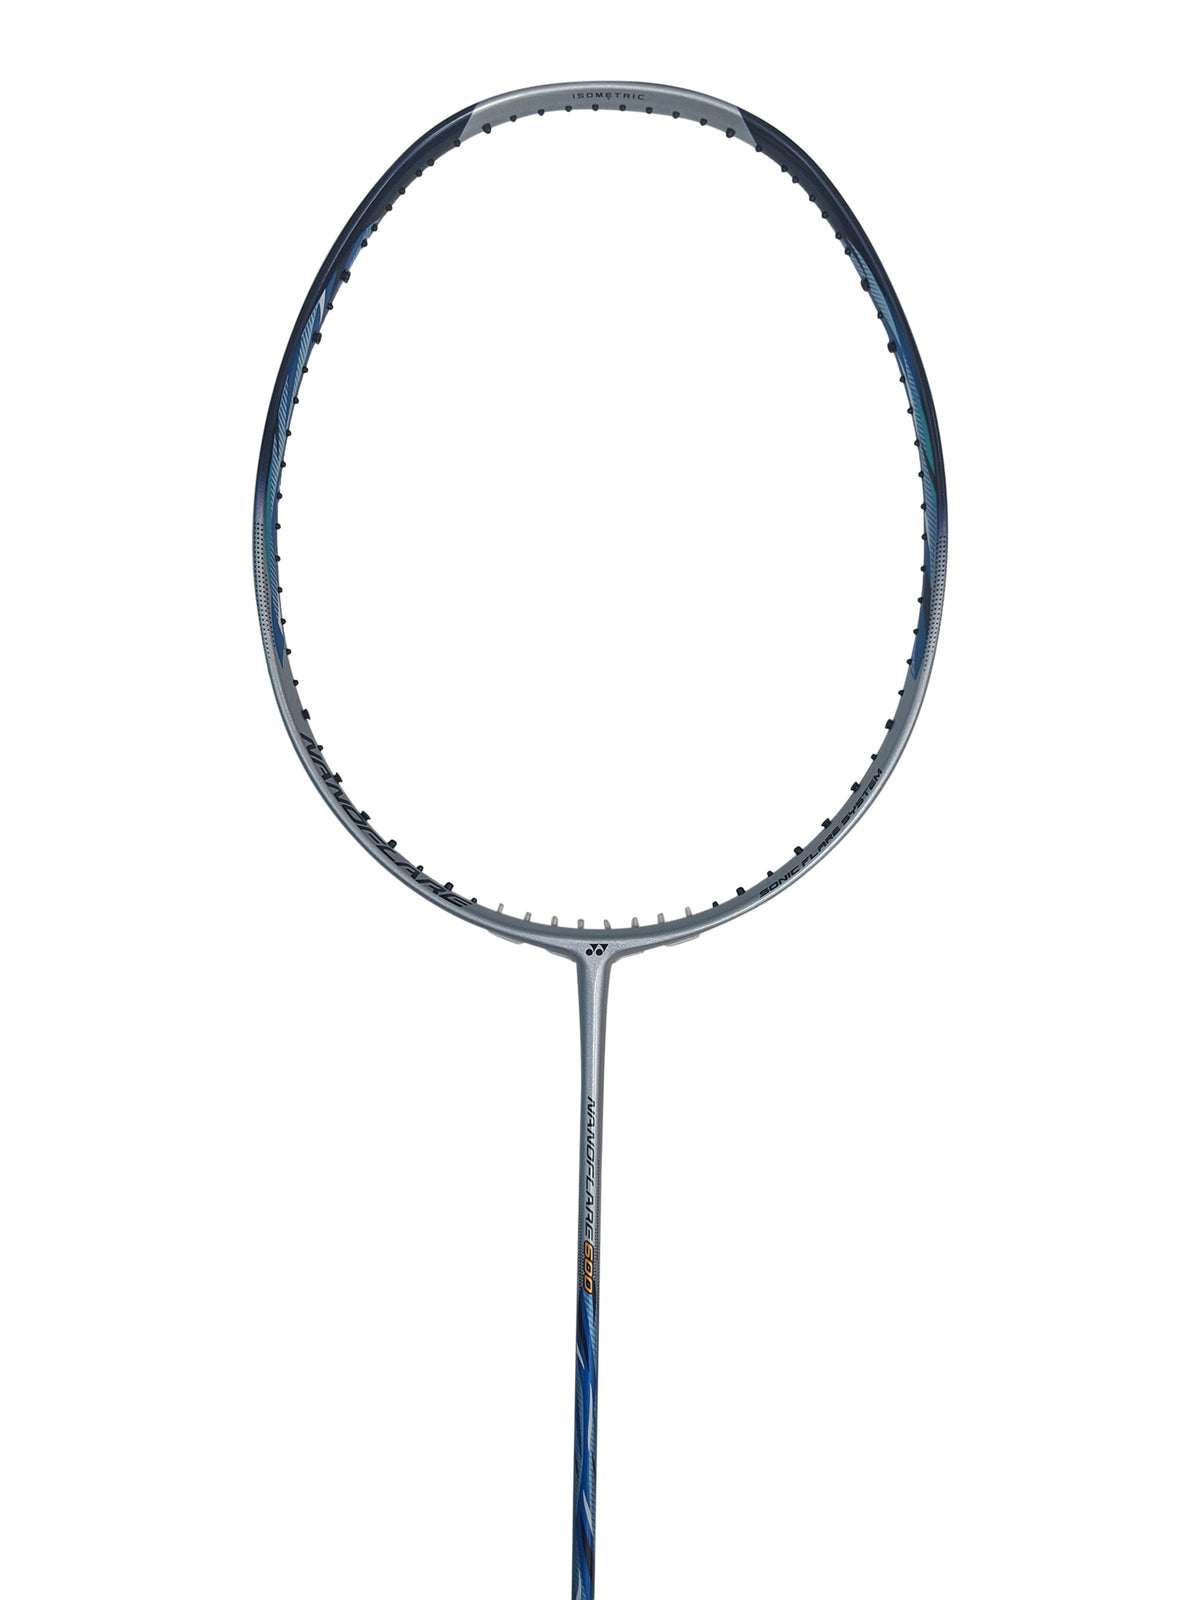 Yonex Nanoflare 600 Badminton Racket (2020)